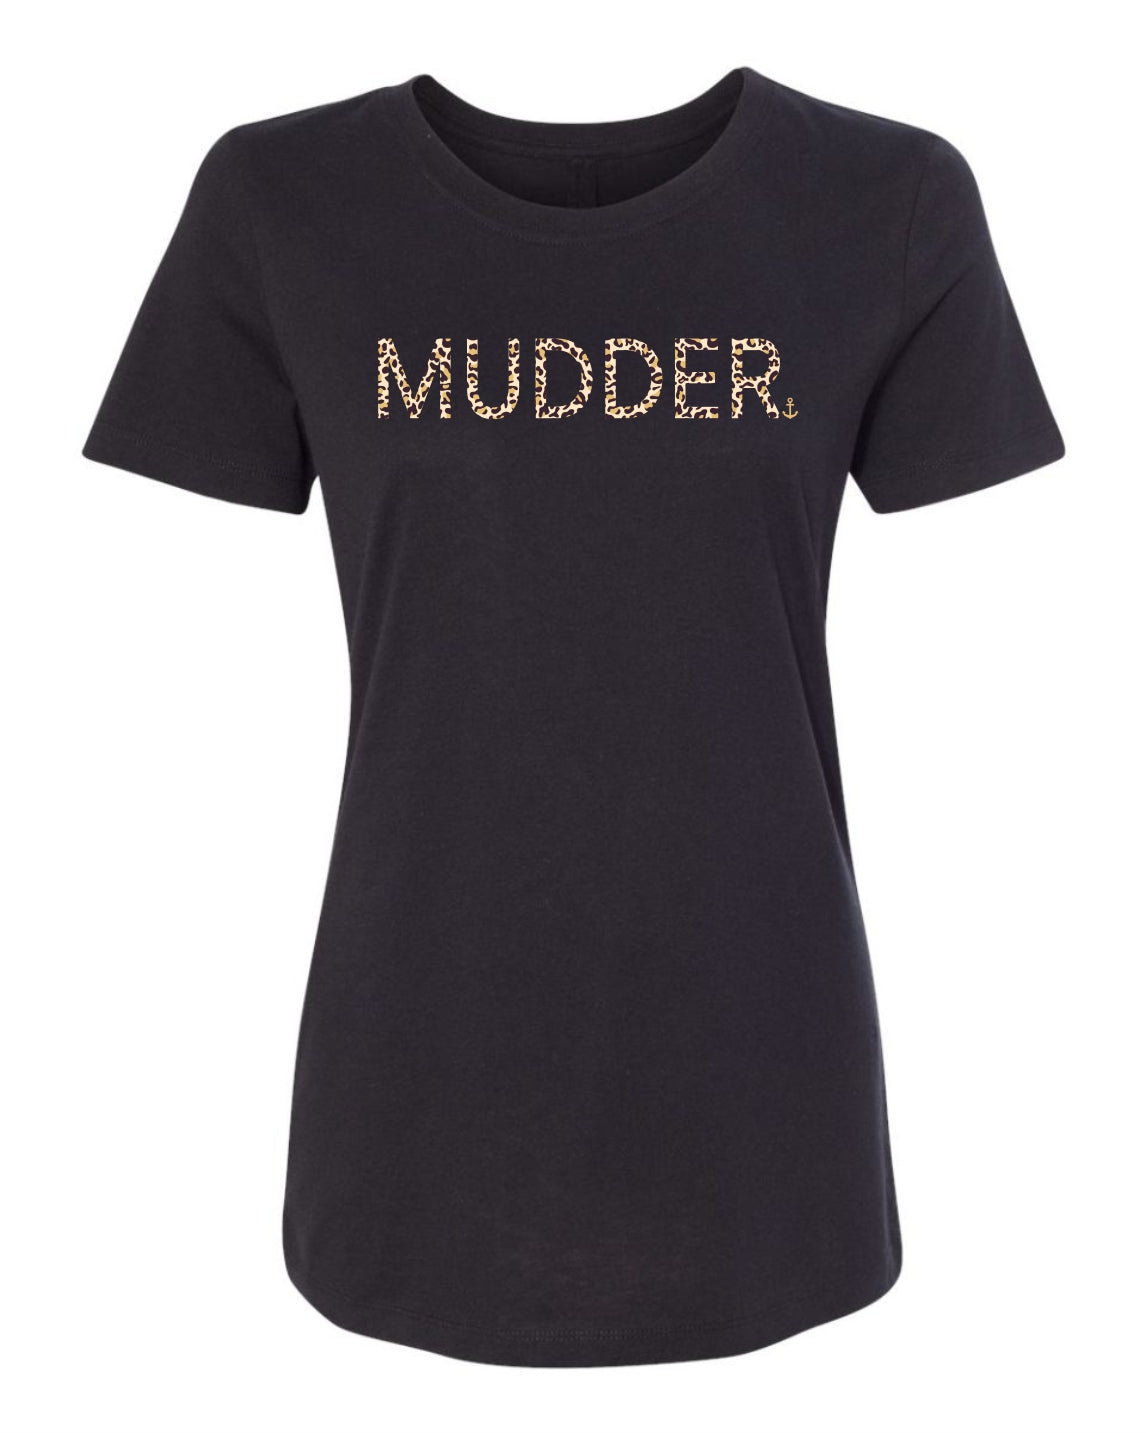 "Mudder" Cheetah T-Shirt